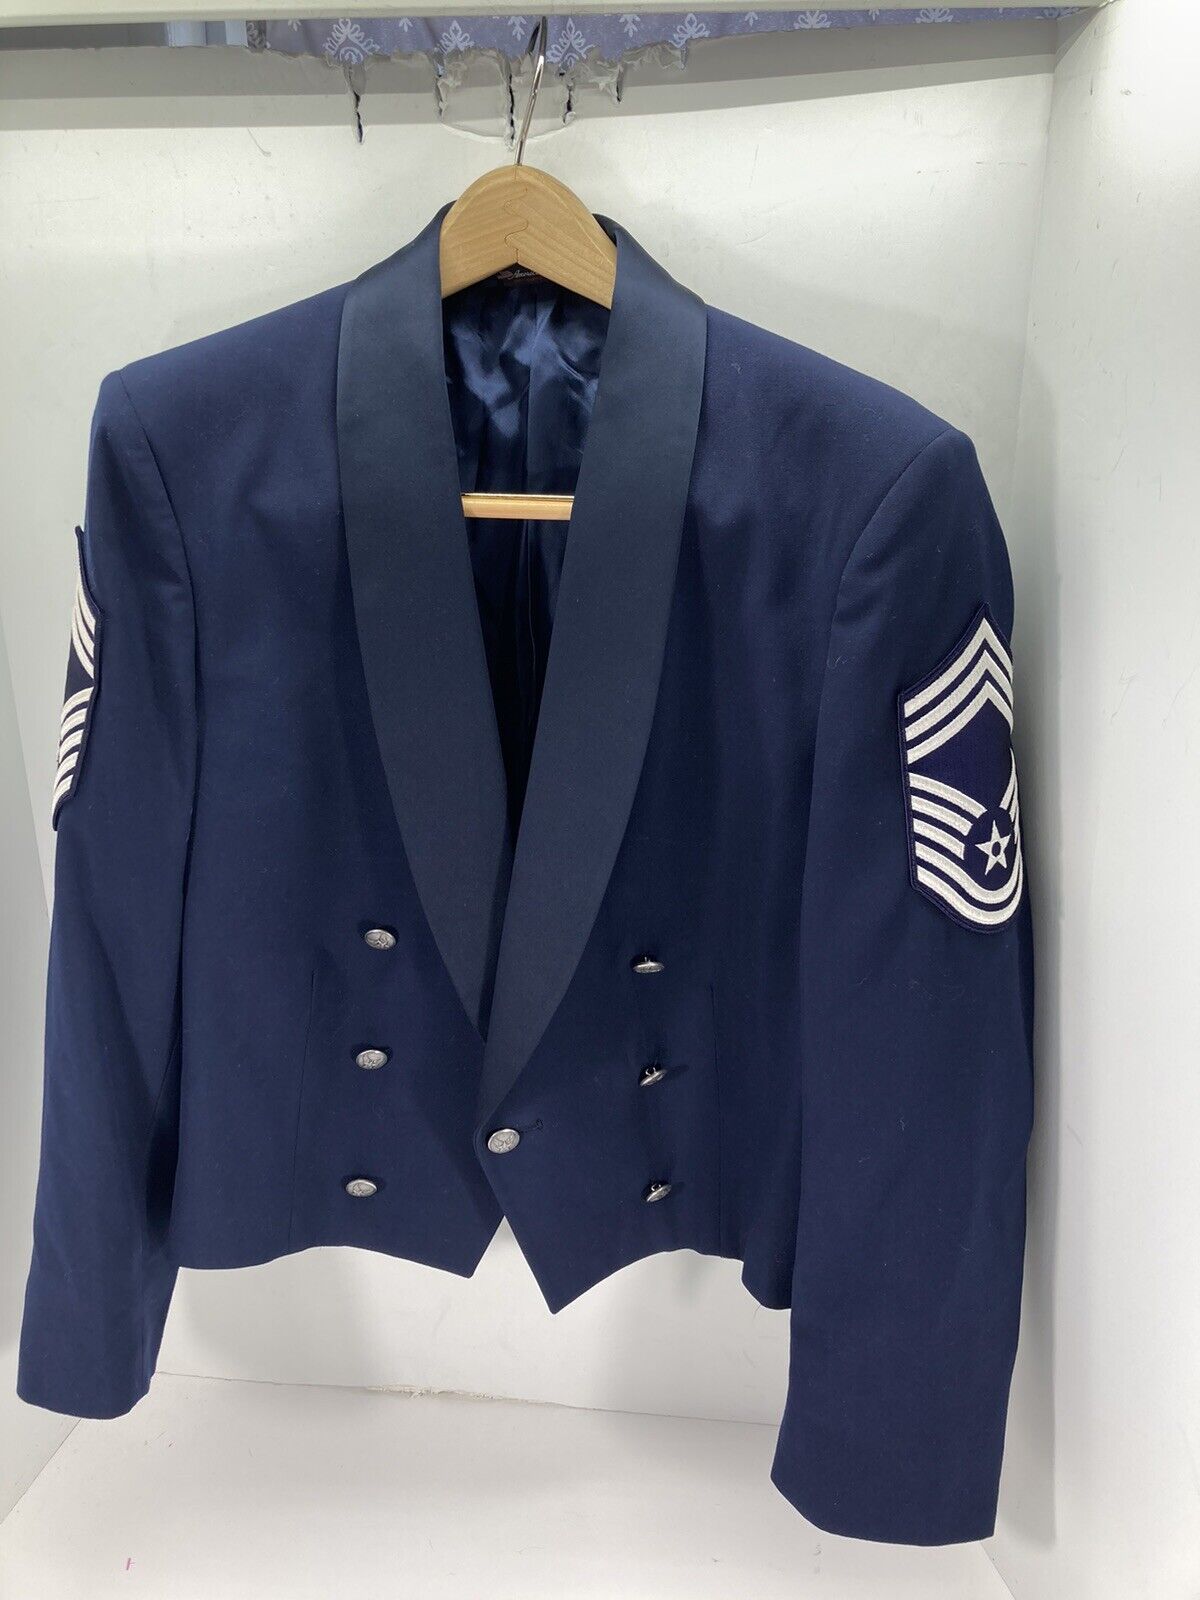 USAF Air Force Enlisted Mess Dress Tuxedo Jacket Men Sz 44R Blue Formal Buttons